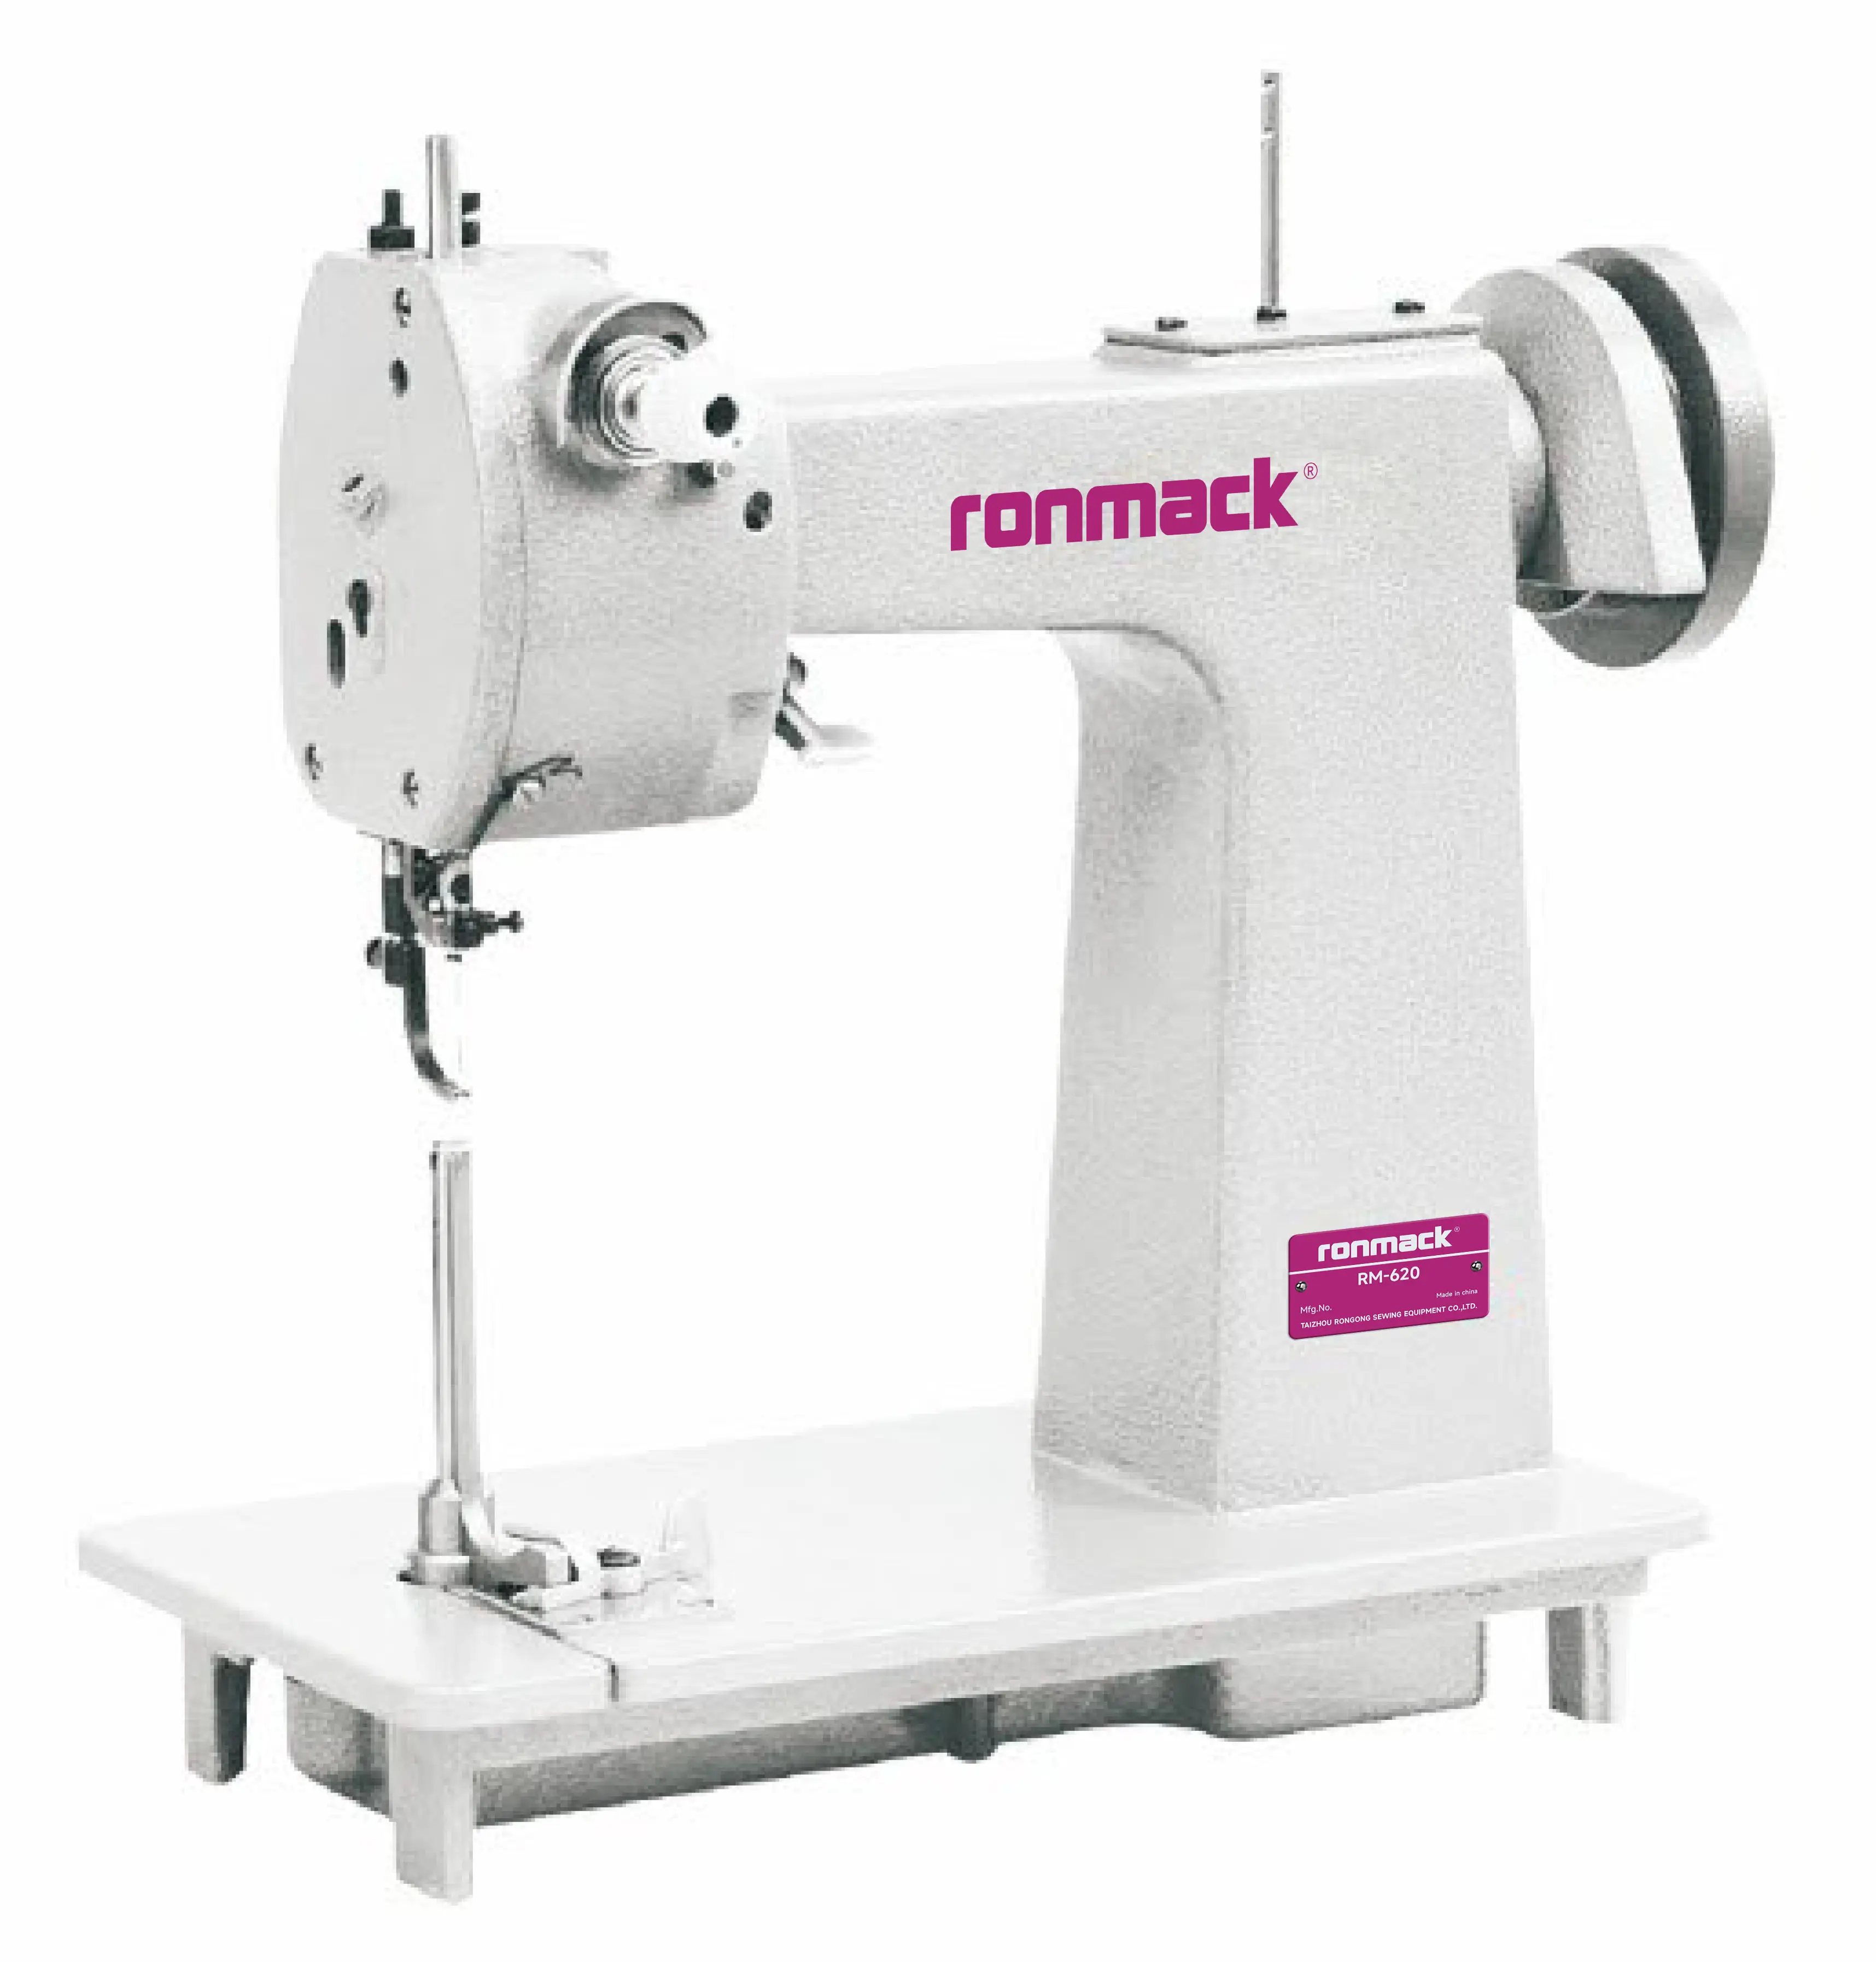 RONMACK RM-620 Small Bed Post Finger Machine Glove Machine Industrial Glove Chain Stitch Sewing Machine